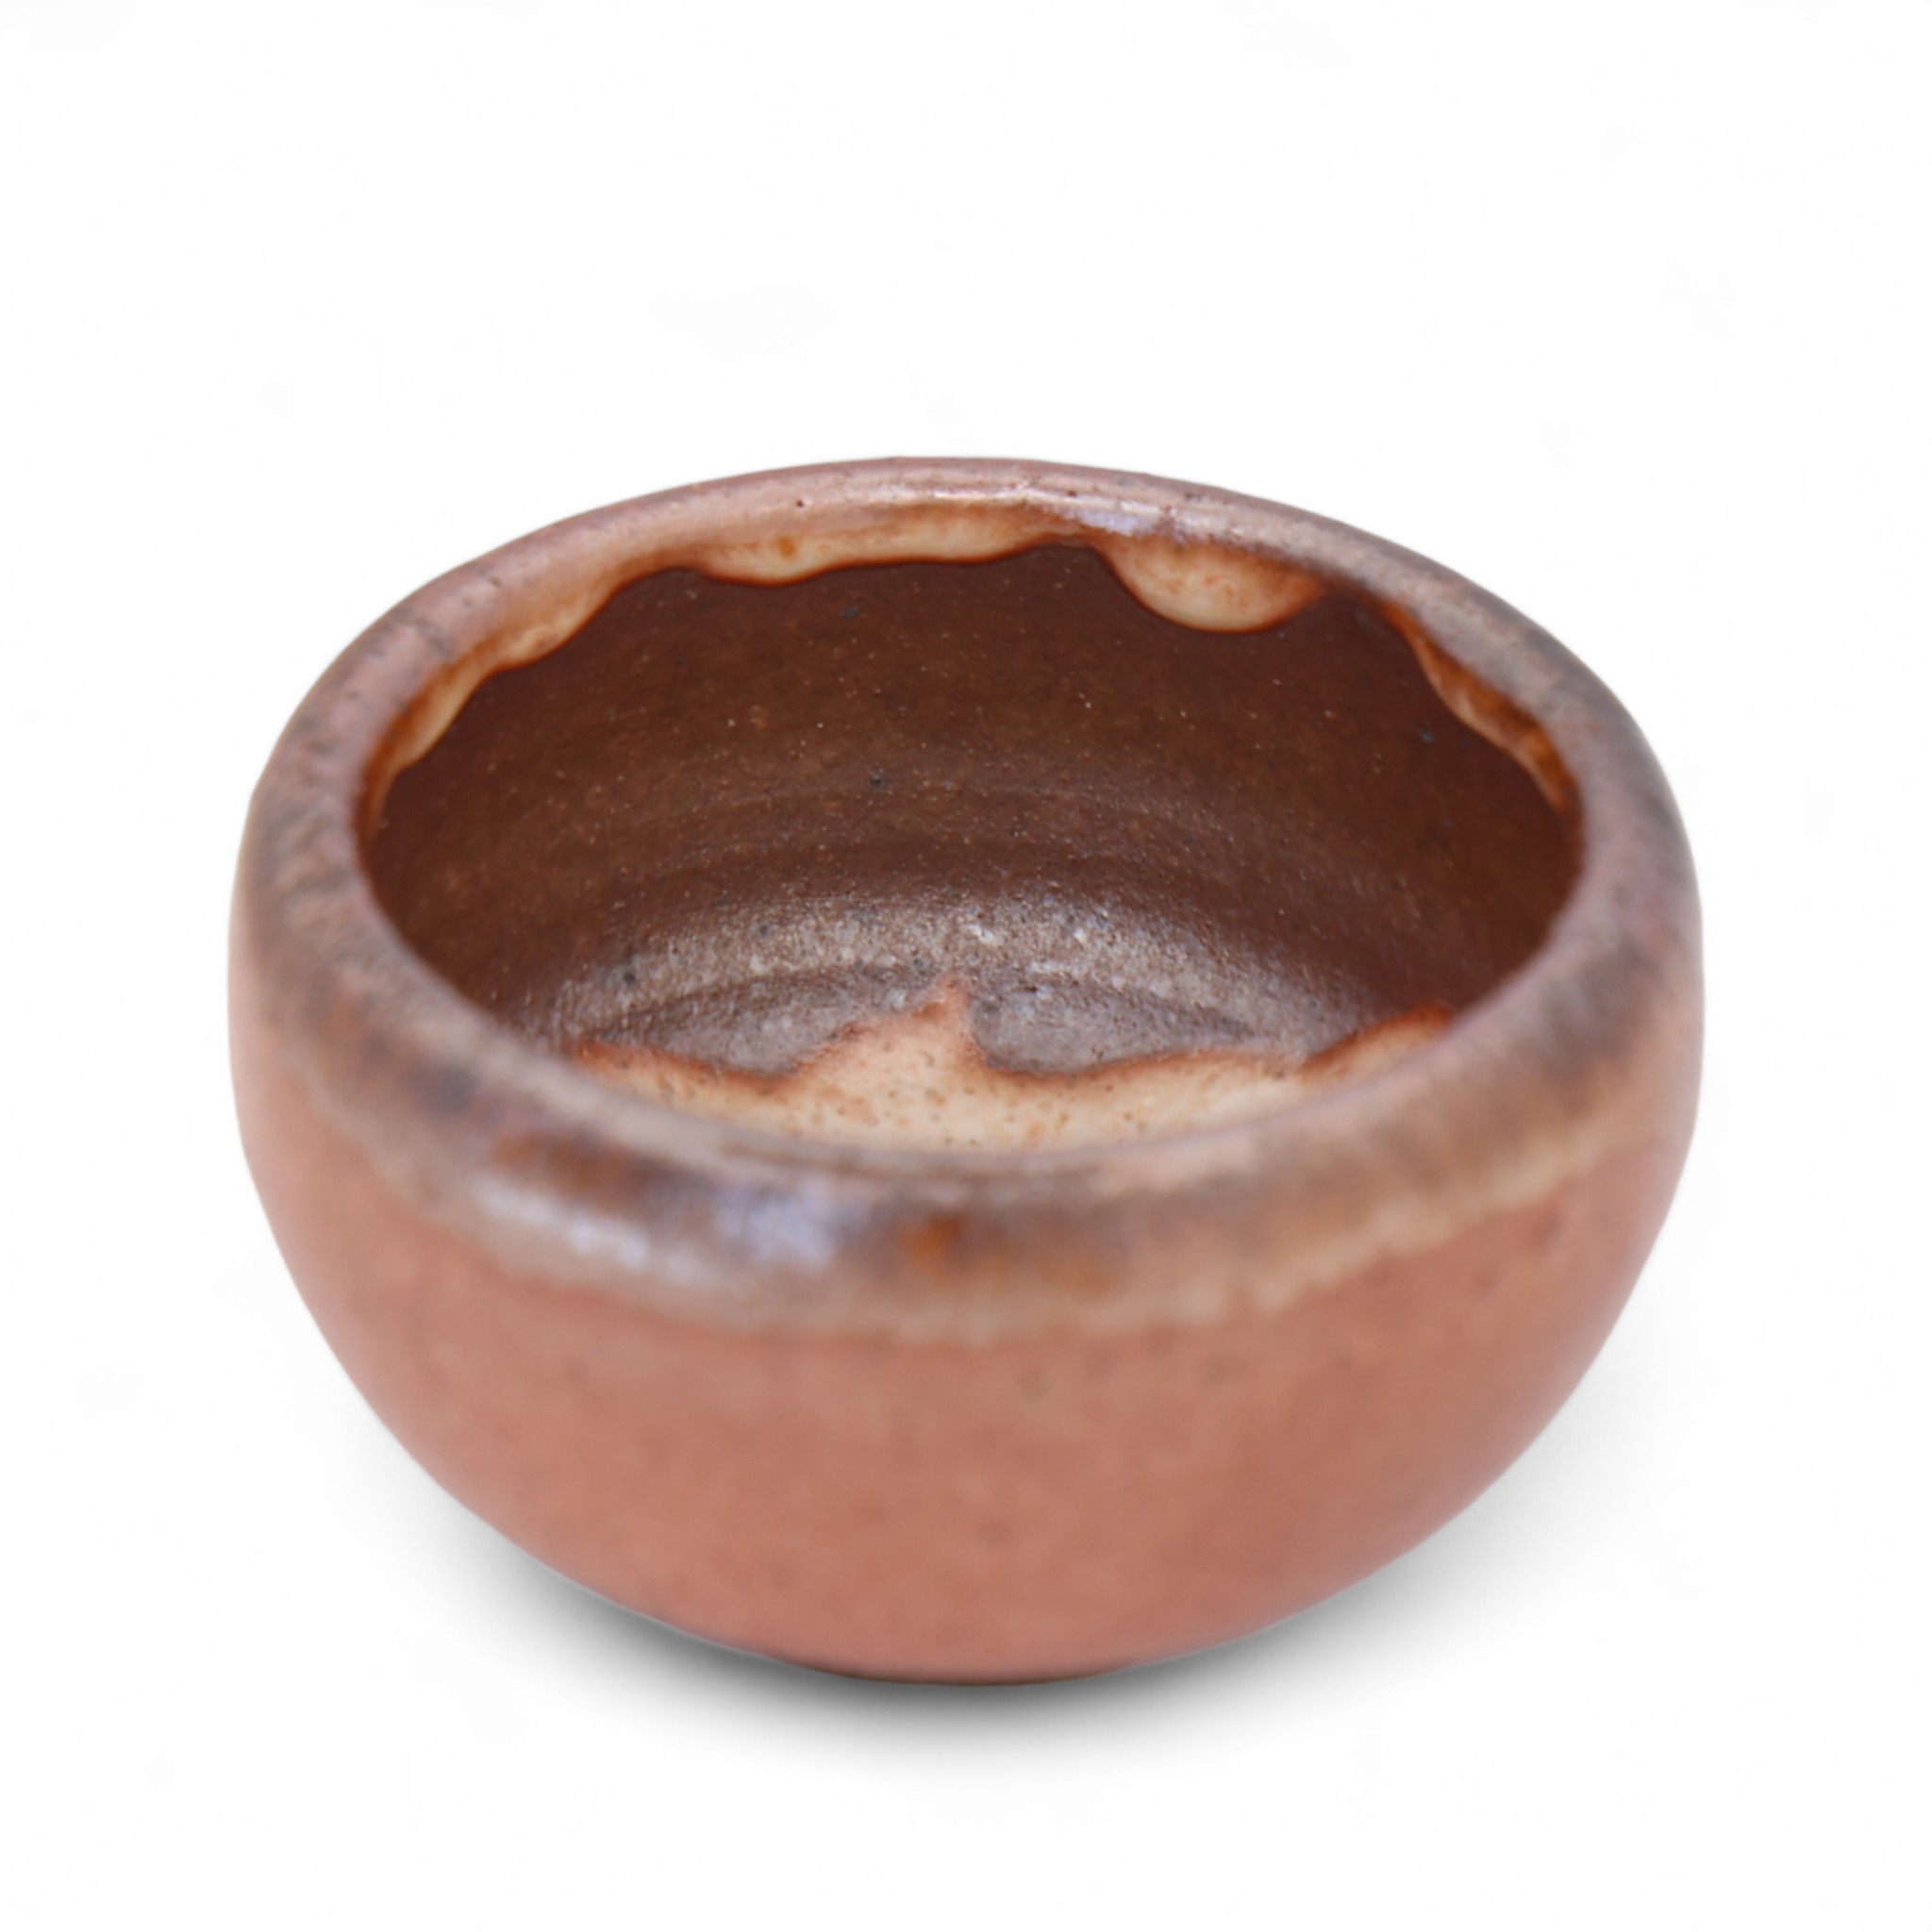 Taiwanese Handmade Wood-Fired Ceramic Teacup - Amber Eclipse